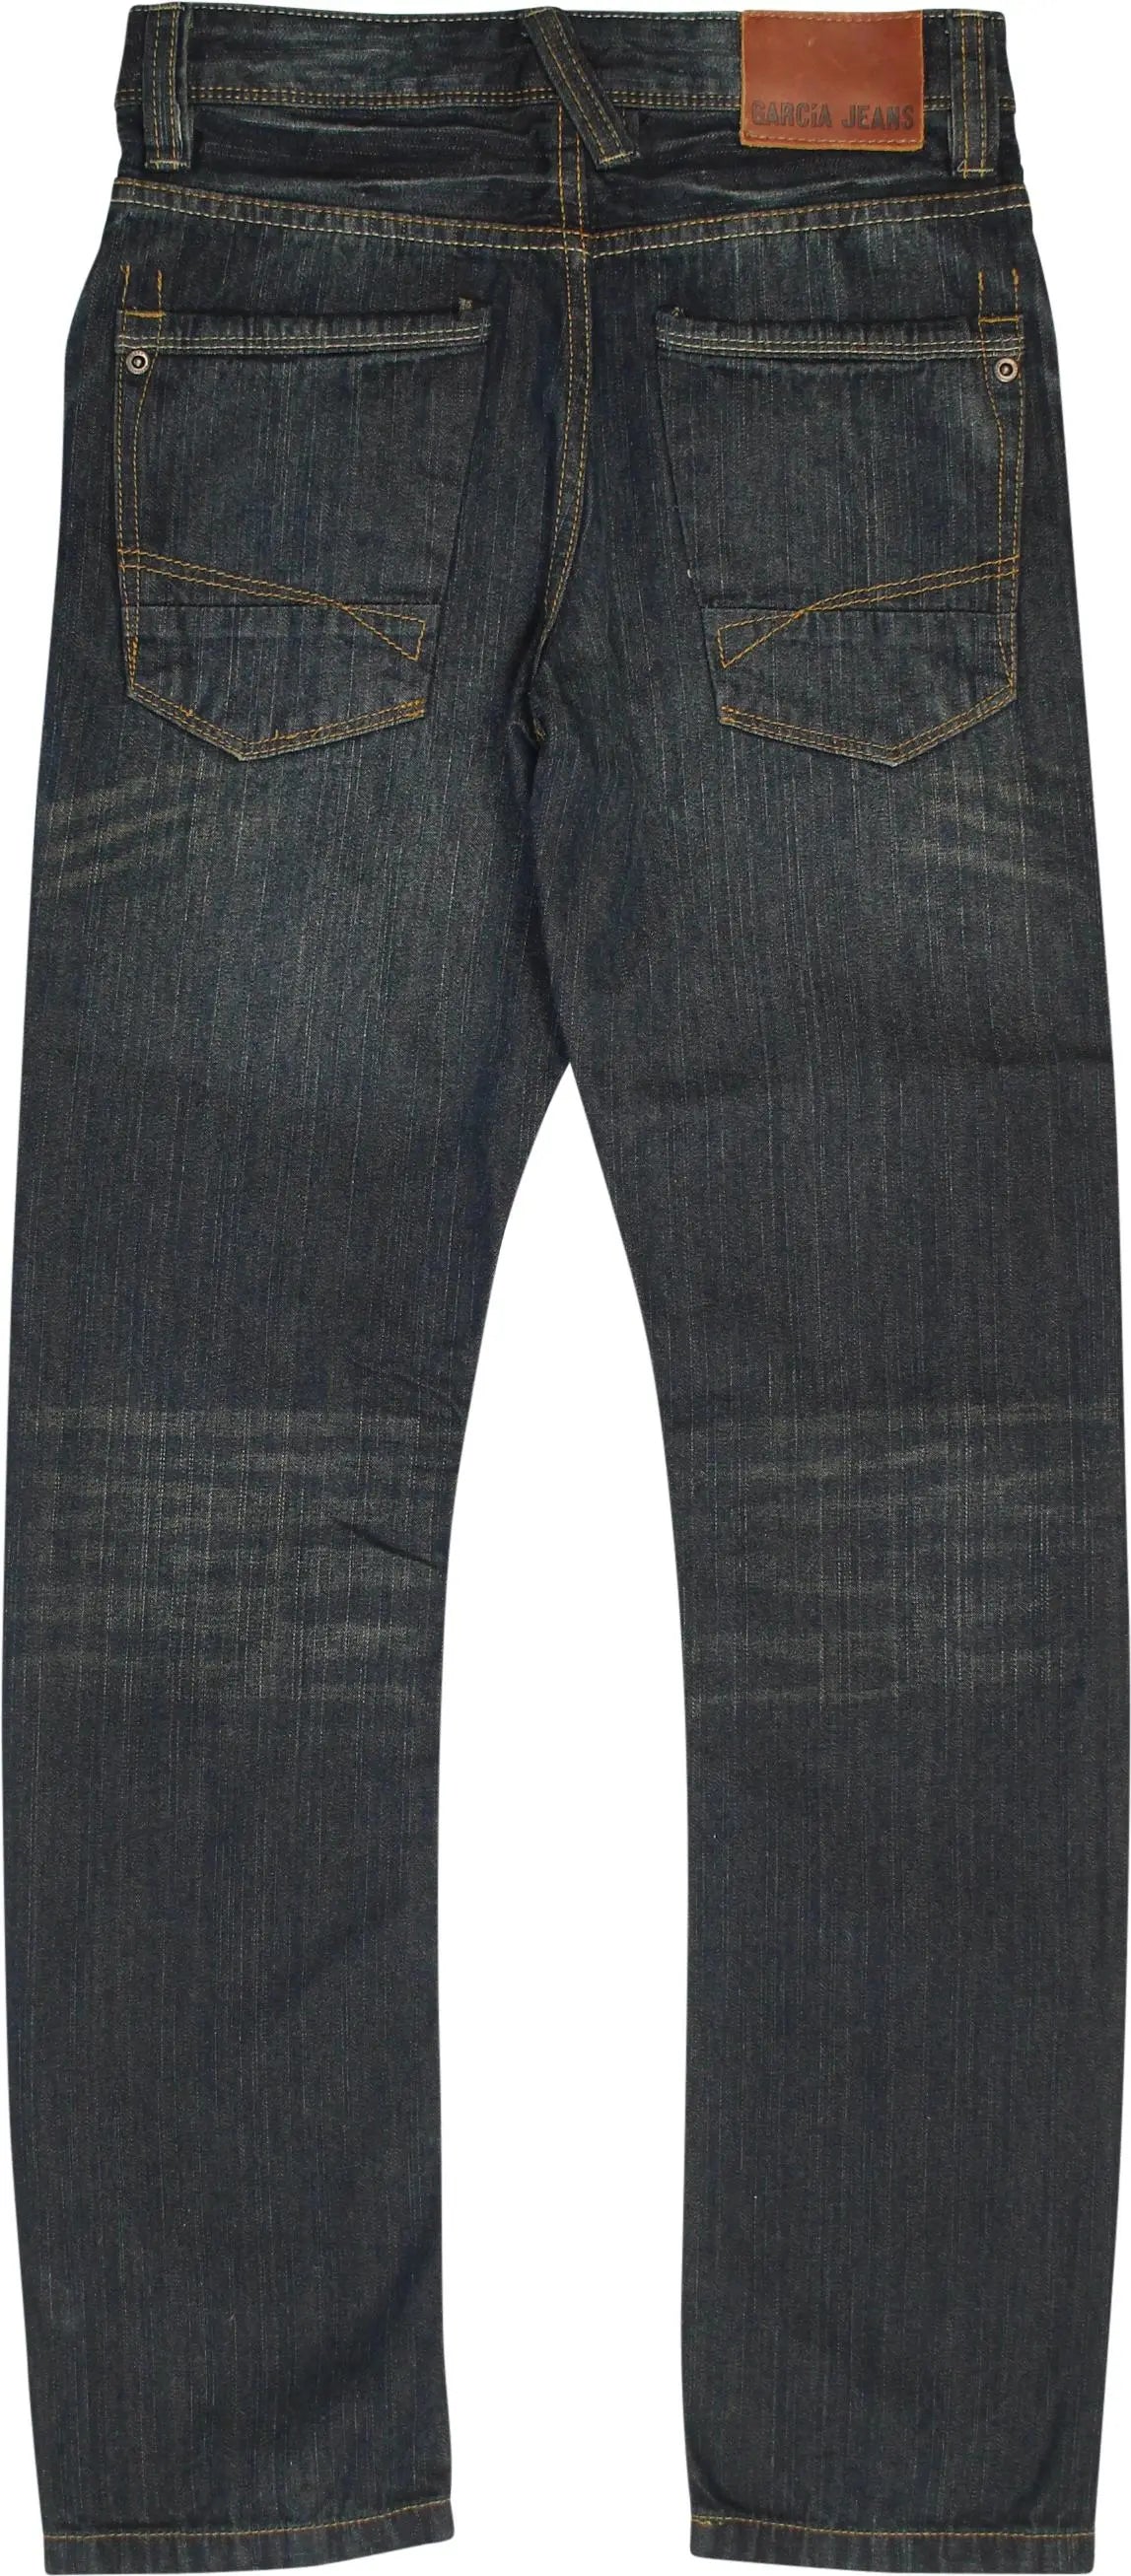 Garcia - Regular Fit Jeans- ThriftTale.com - Vintage and second handclothing